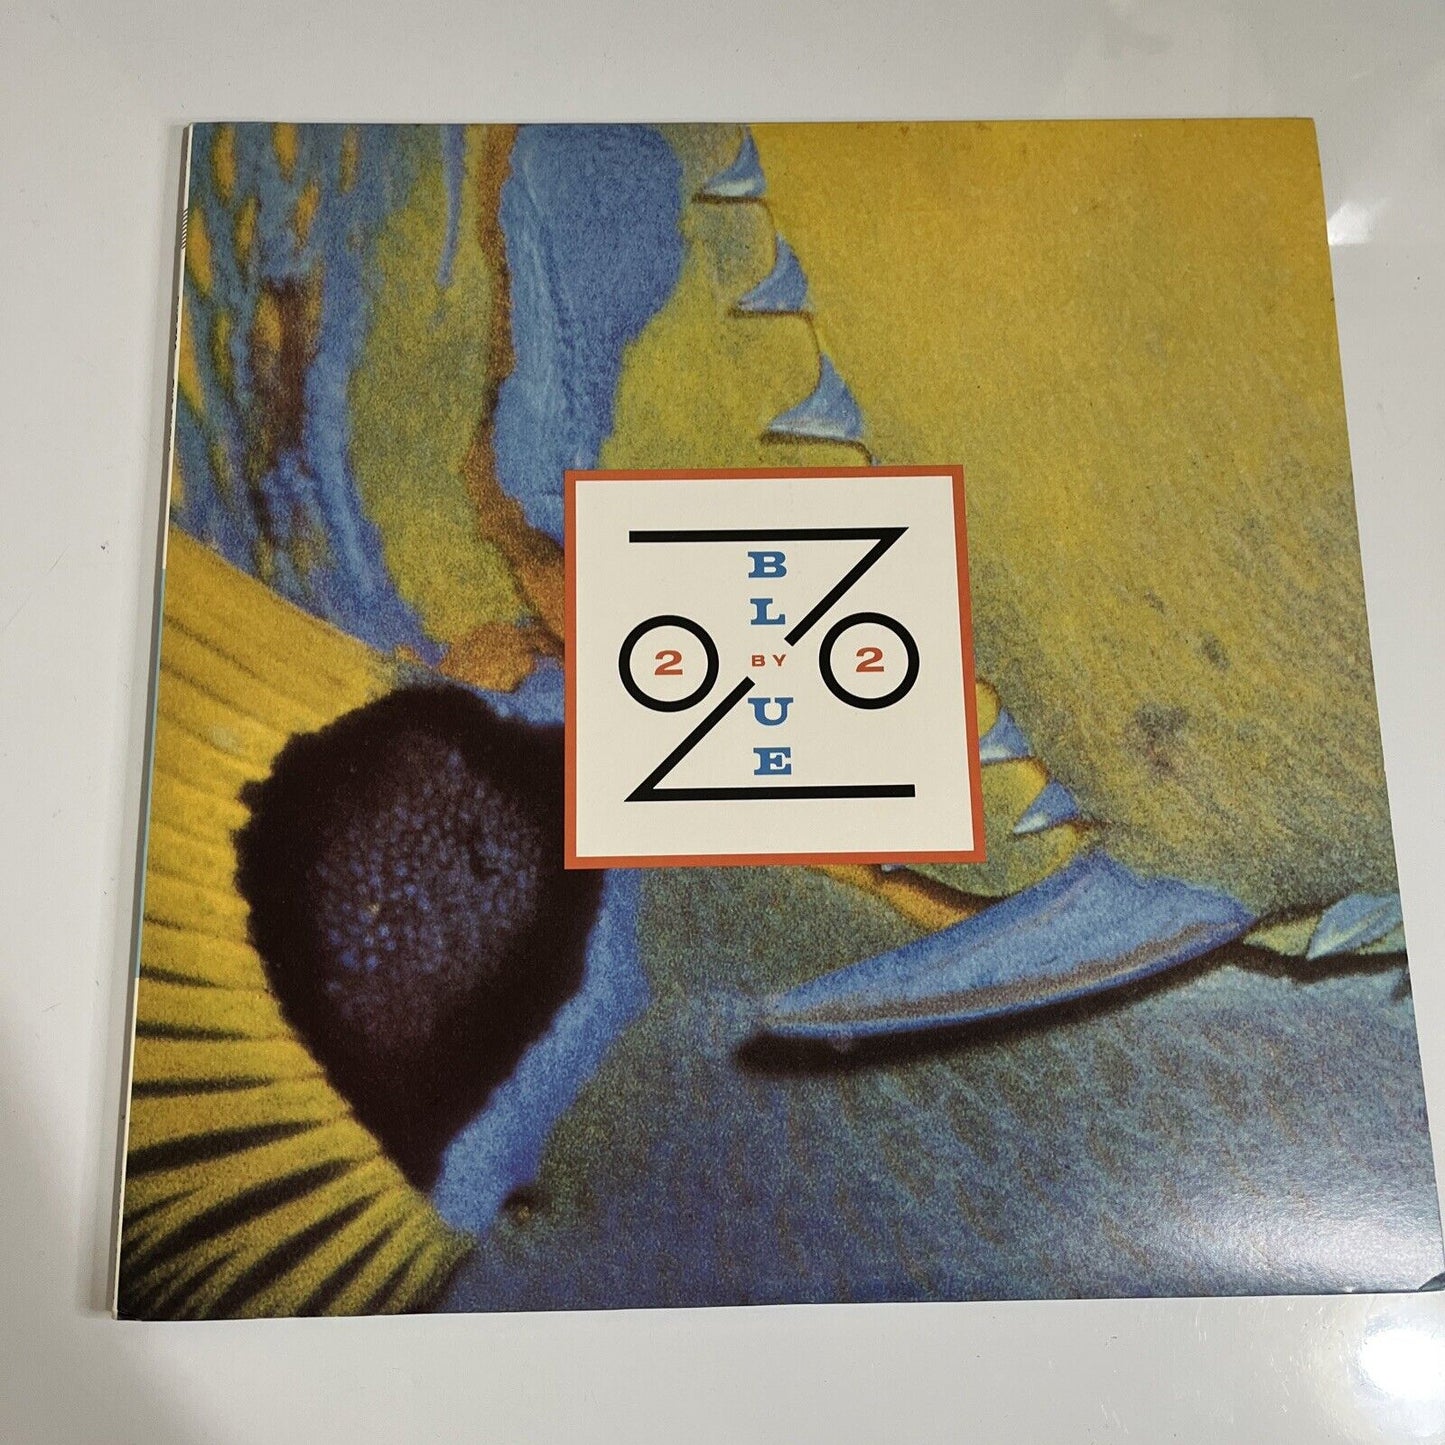 Blue Zoo – 2 By 2 LP 1983 Vinyl Record + Poster 25AP 2615